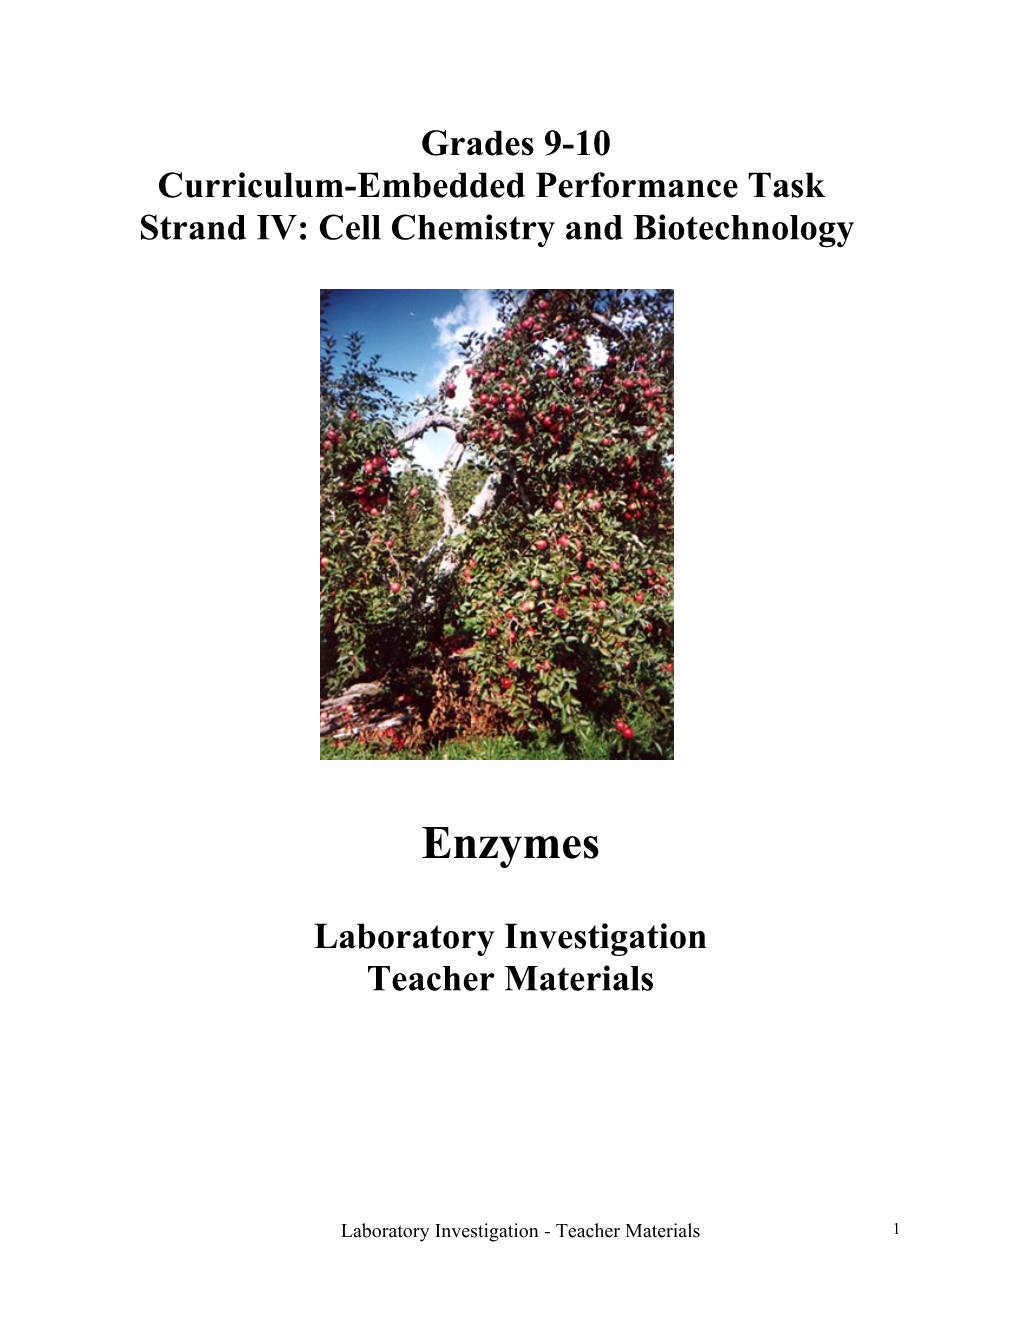 Curriculum-Embedded Performance Task